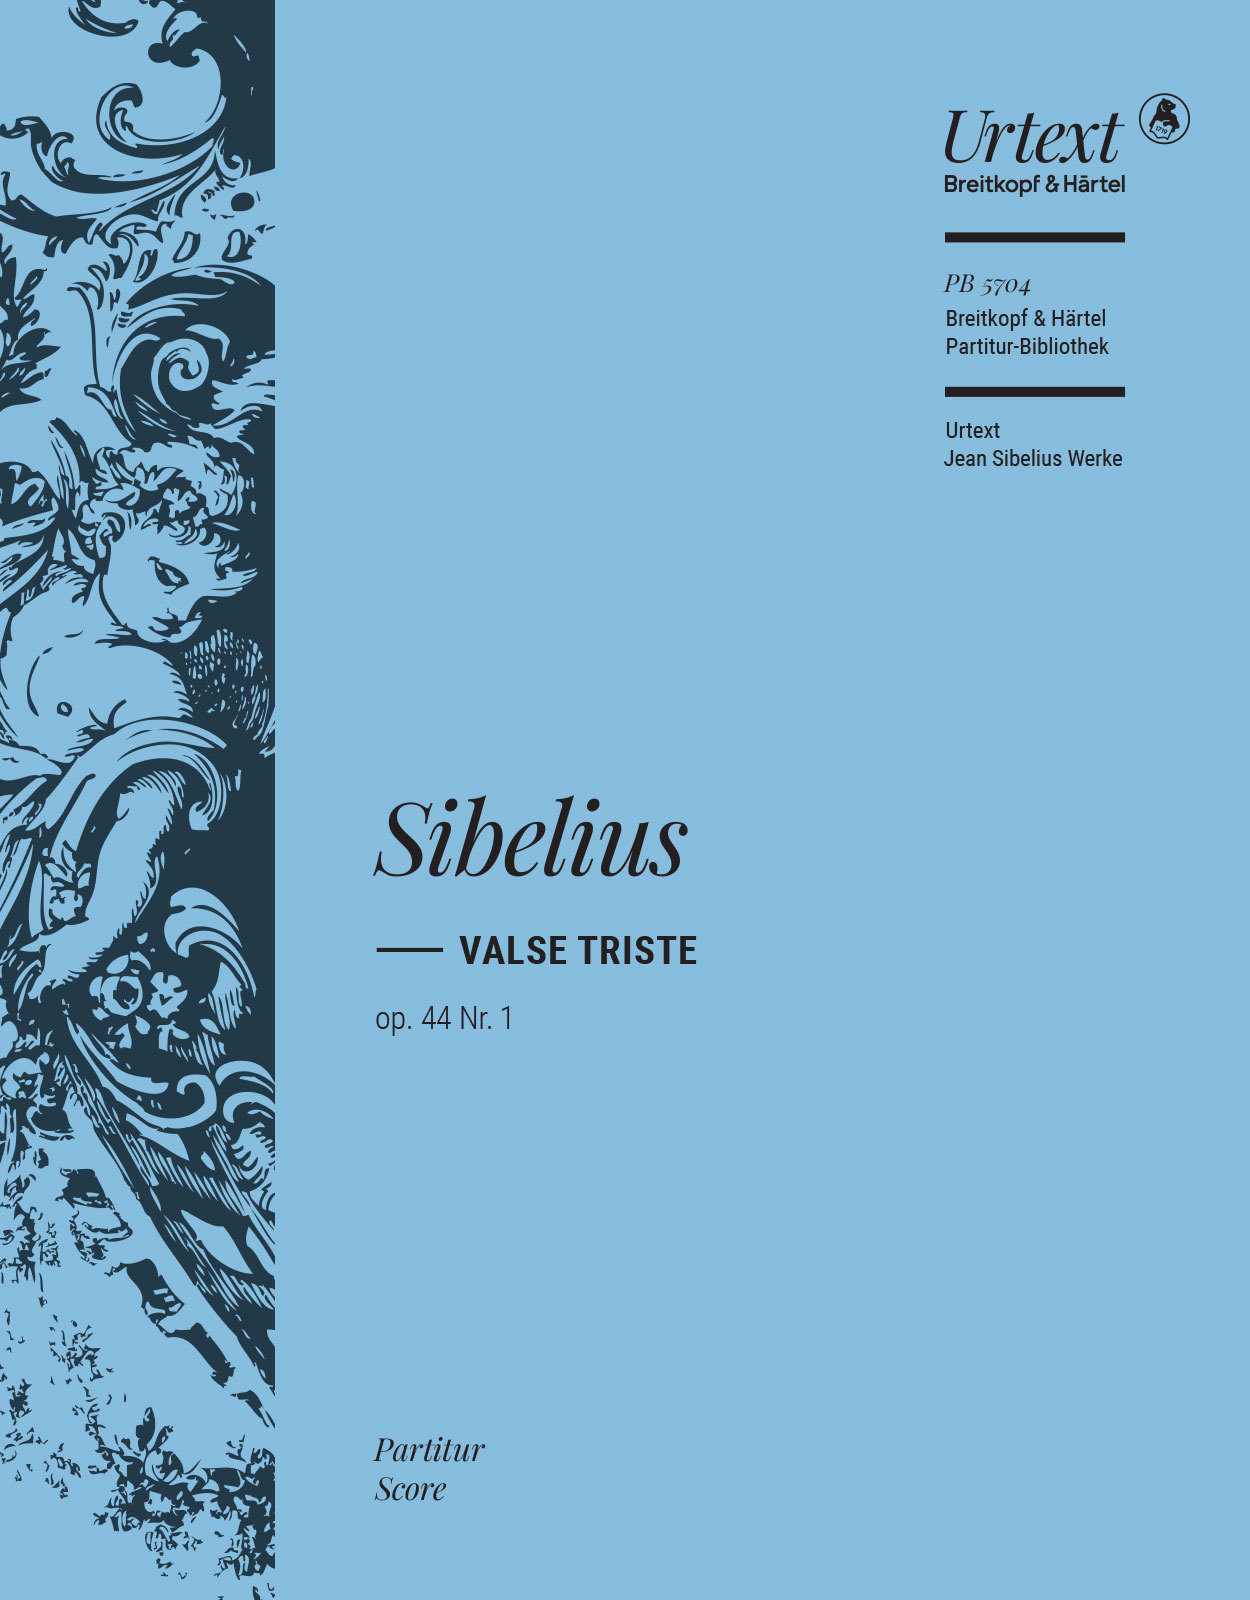 Sibelius Valse Triste Op44 No1 Score Sheet Music Songbook